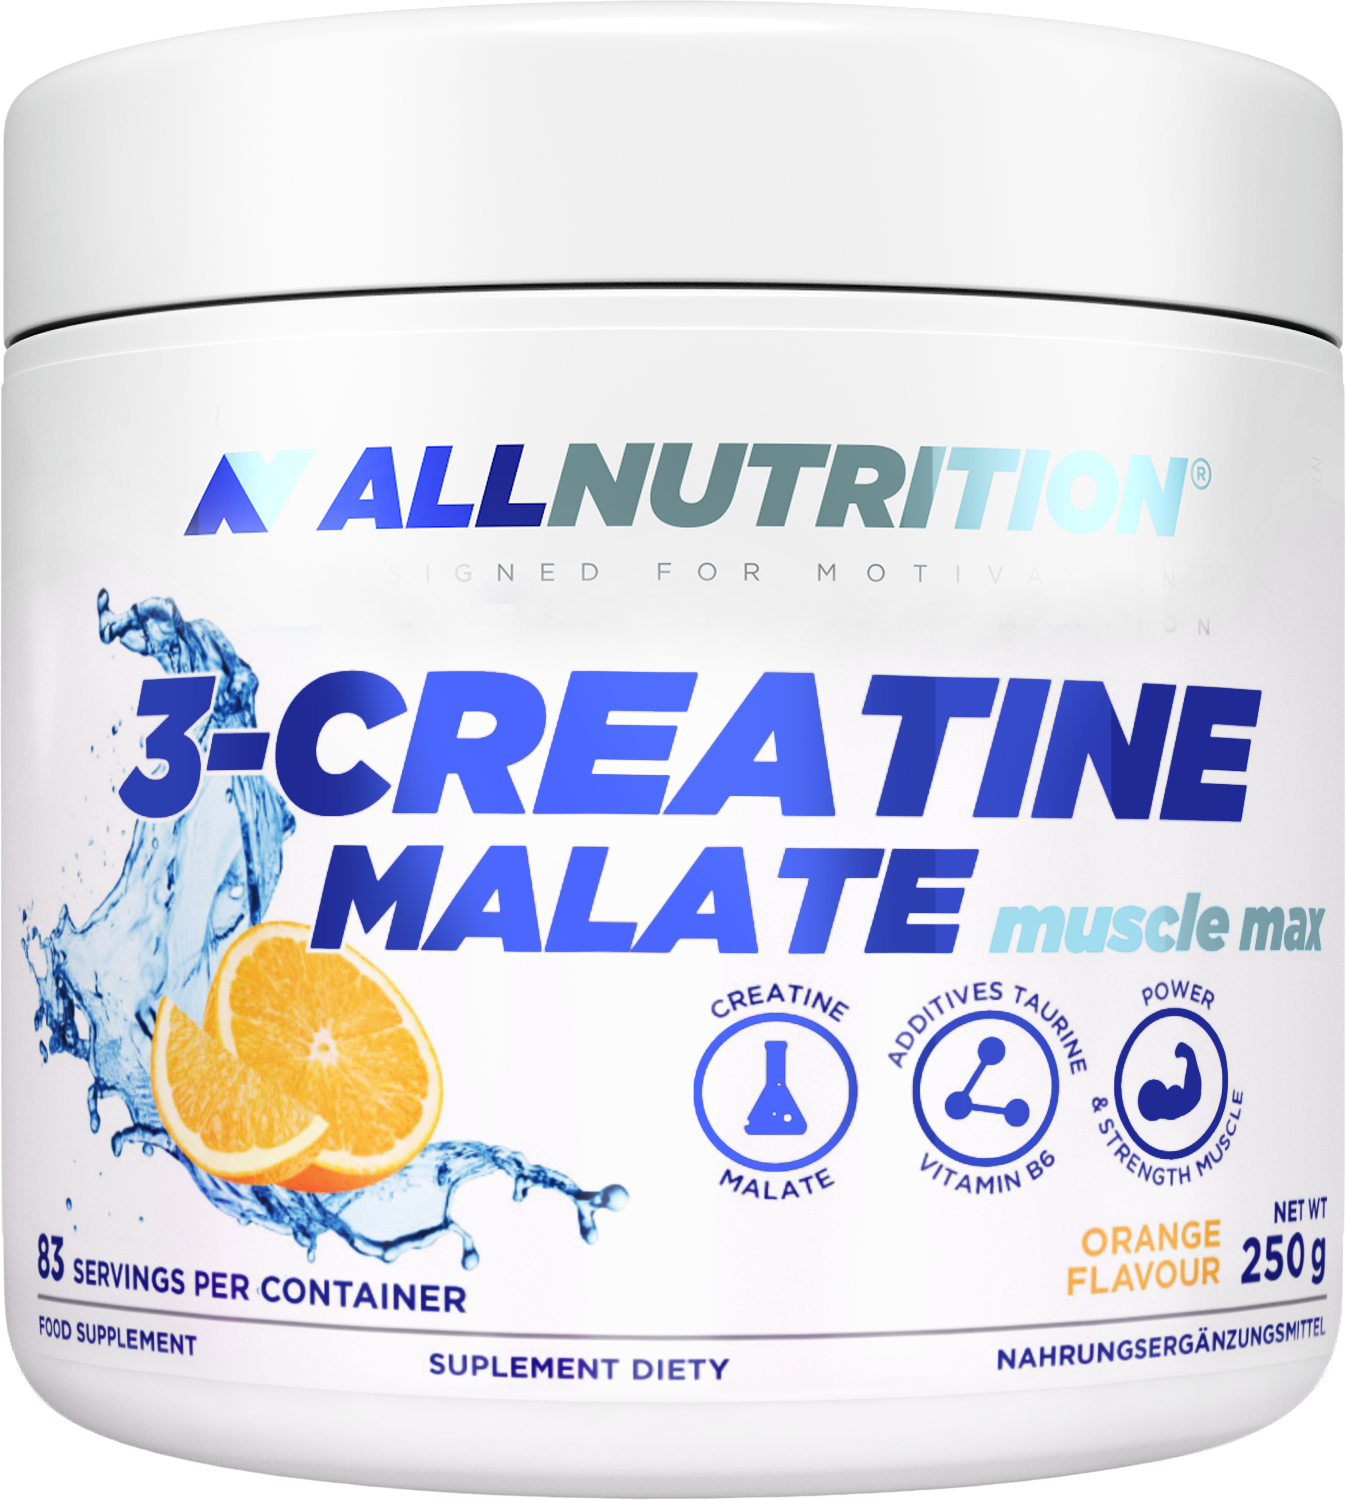 3 Creatine Malate | Tri-Creatine Malate Powder - Портокал